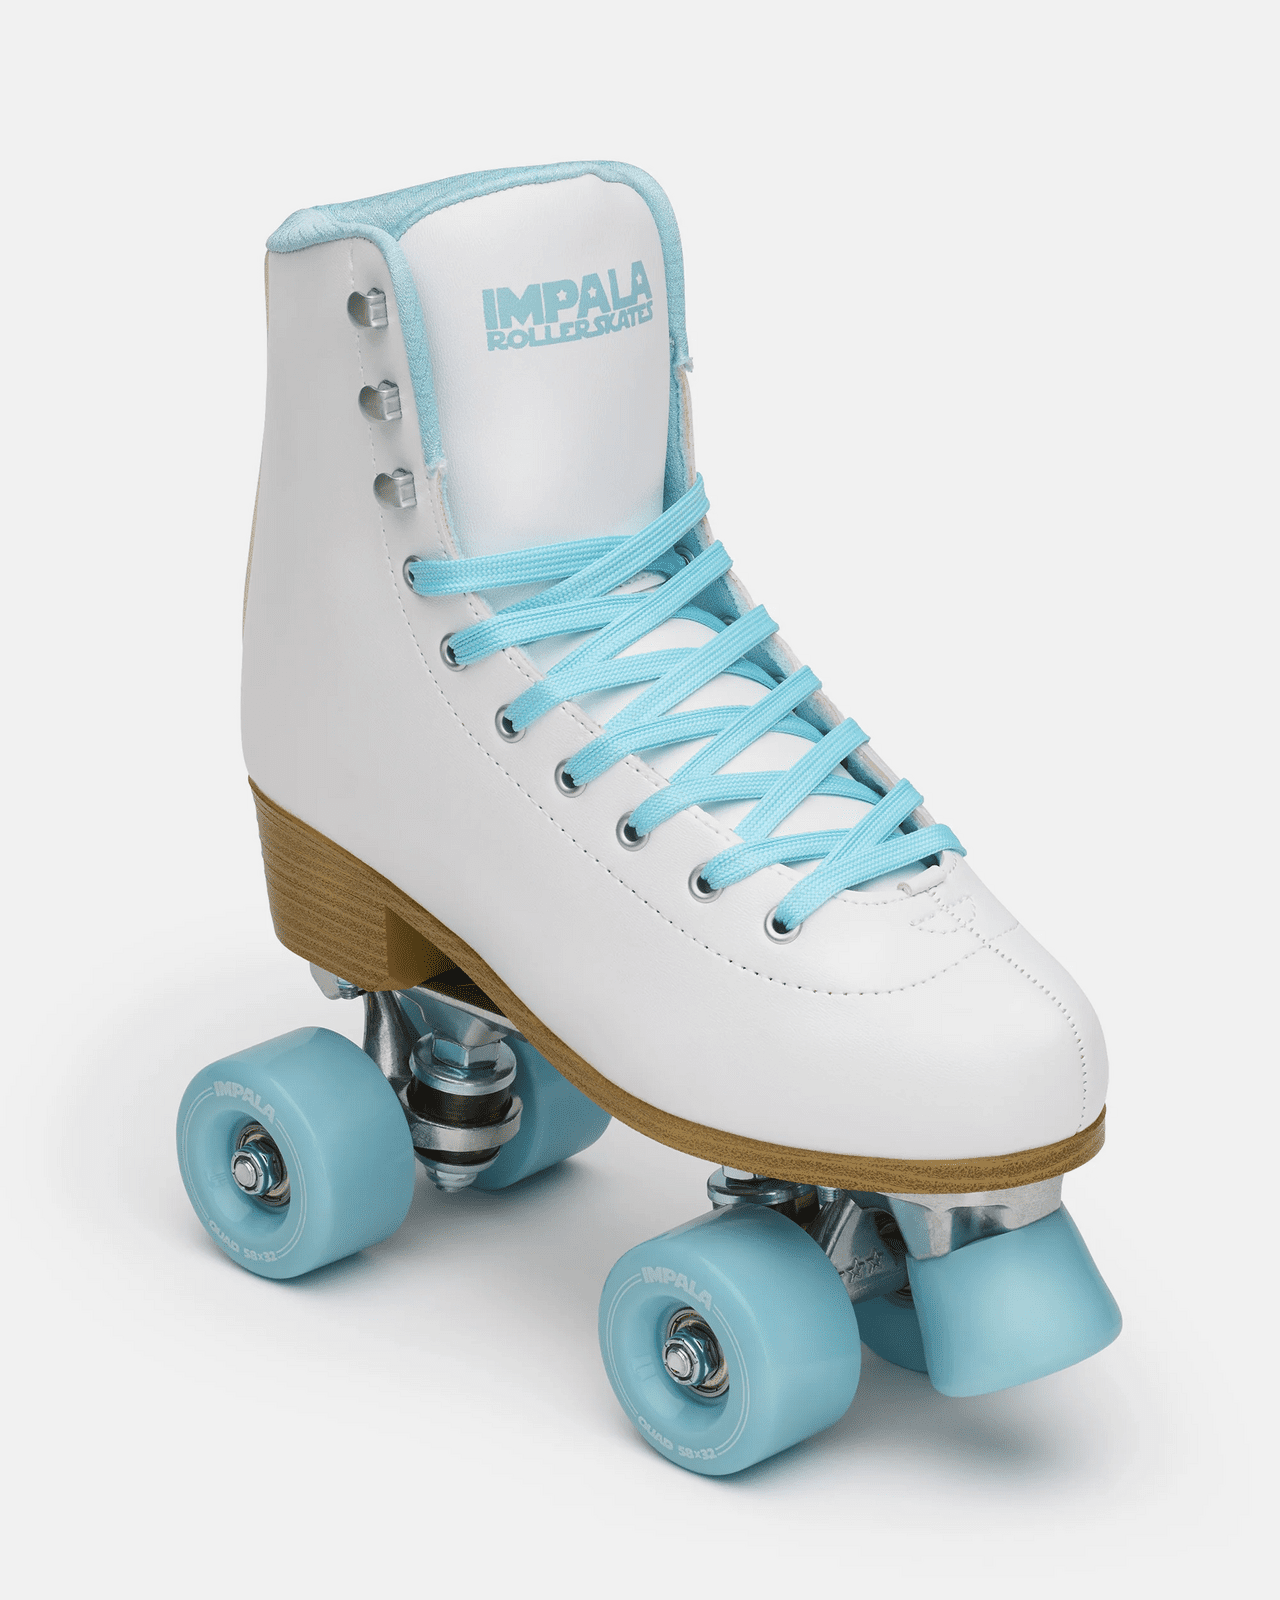 Impala - Roller Skates - White Ice - trekové brusle Velikost (brusle): 38